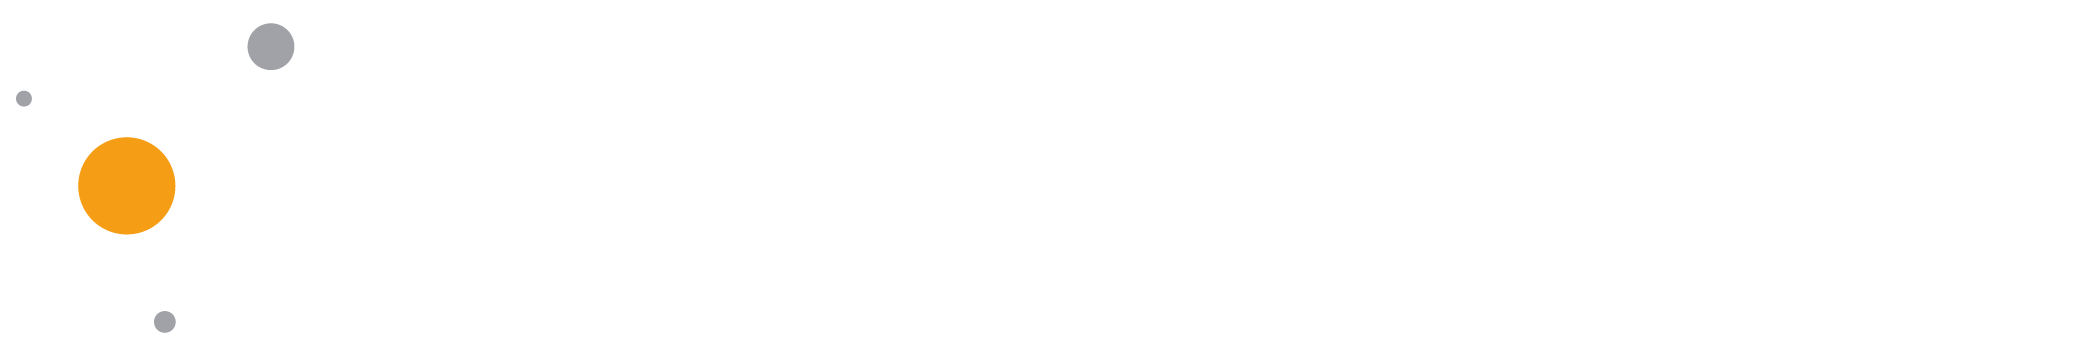 Darktrace plc logo